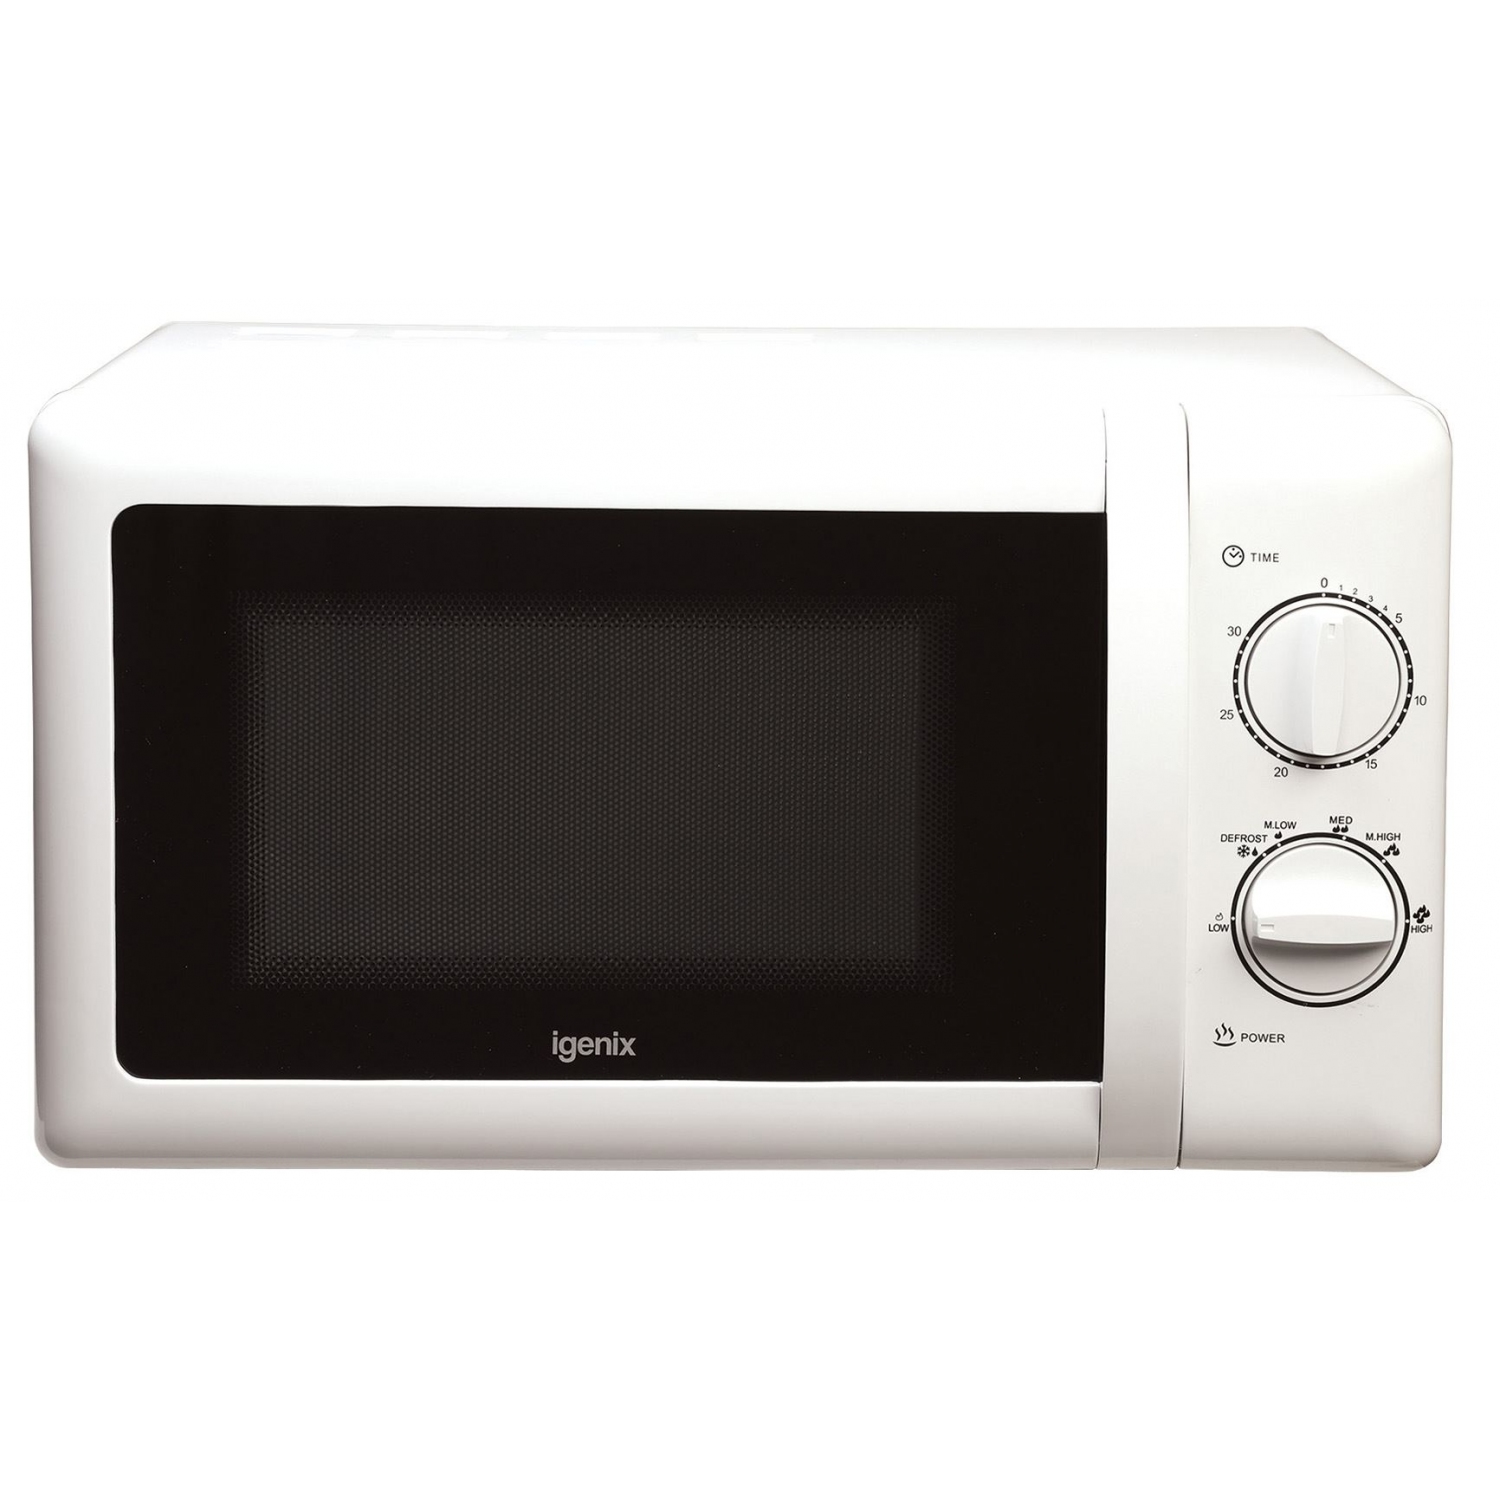 Igenix 20L Dial Control Microwave (white) - 0